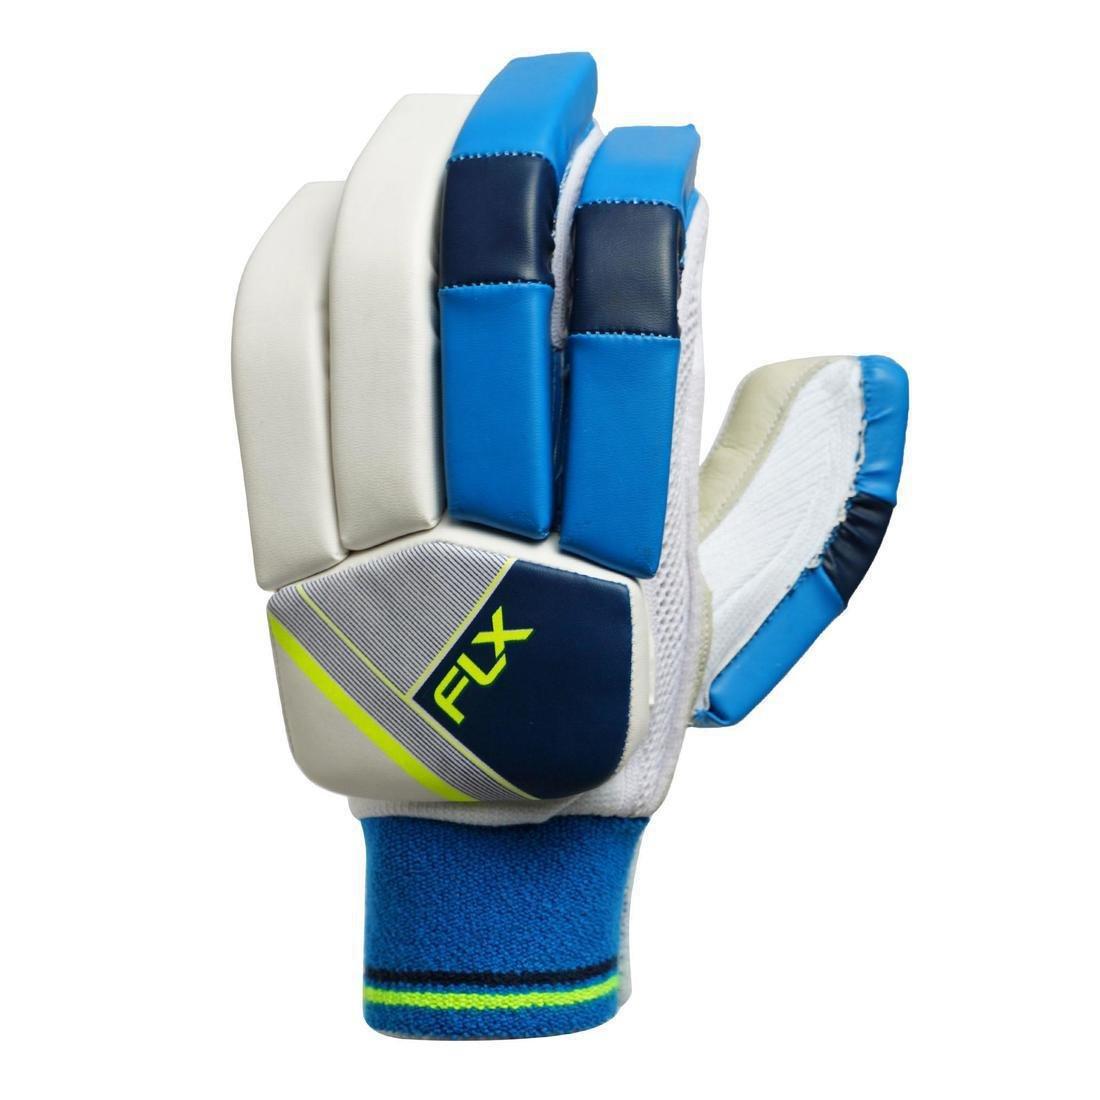 FLX - Unisex Cricket Batting Glove - Gl 100, Blue